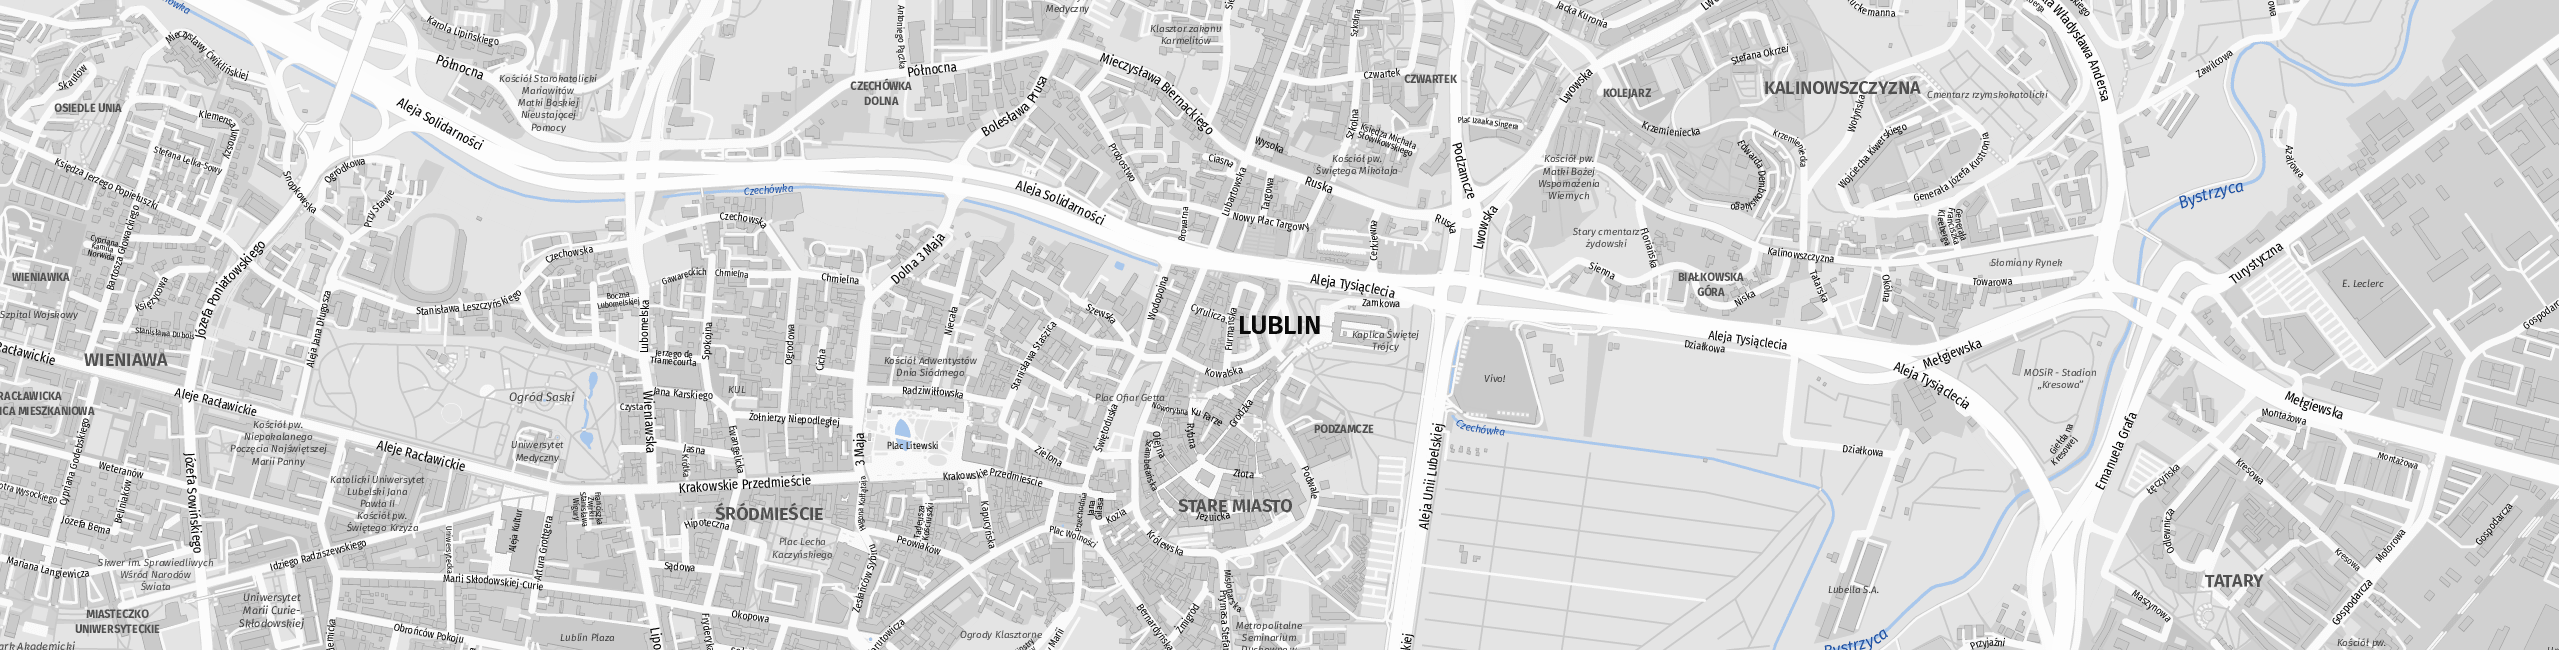 Stadtplan Lublin zum Downloaden.